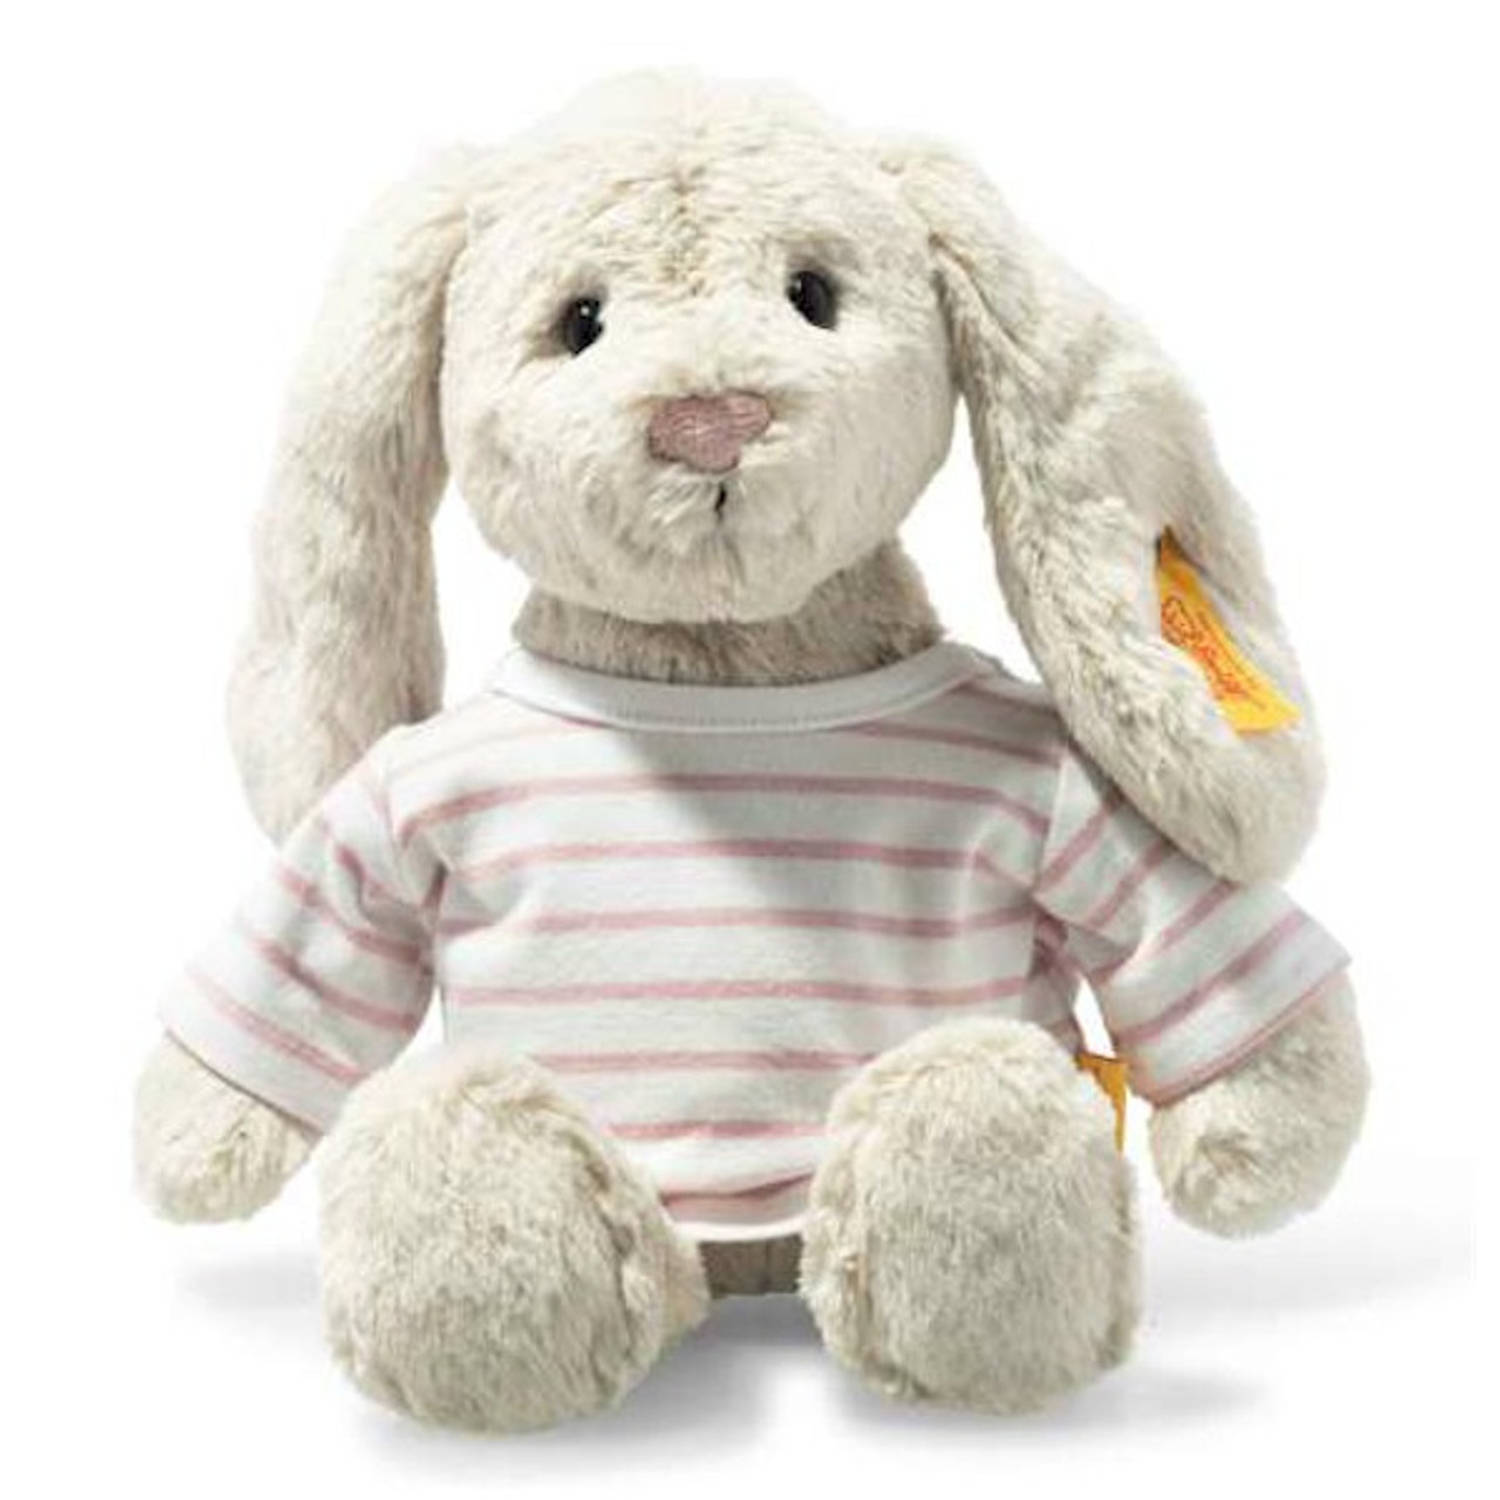 Steiff Soft Cuddly Friends Hoppie rabbit with T-shirt, light grey